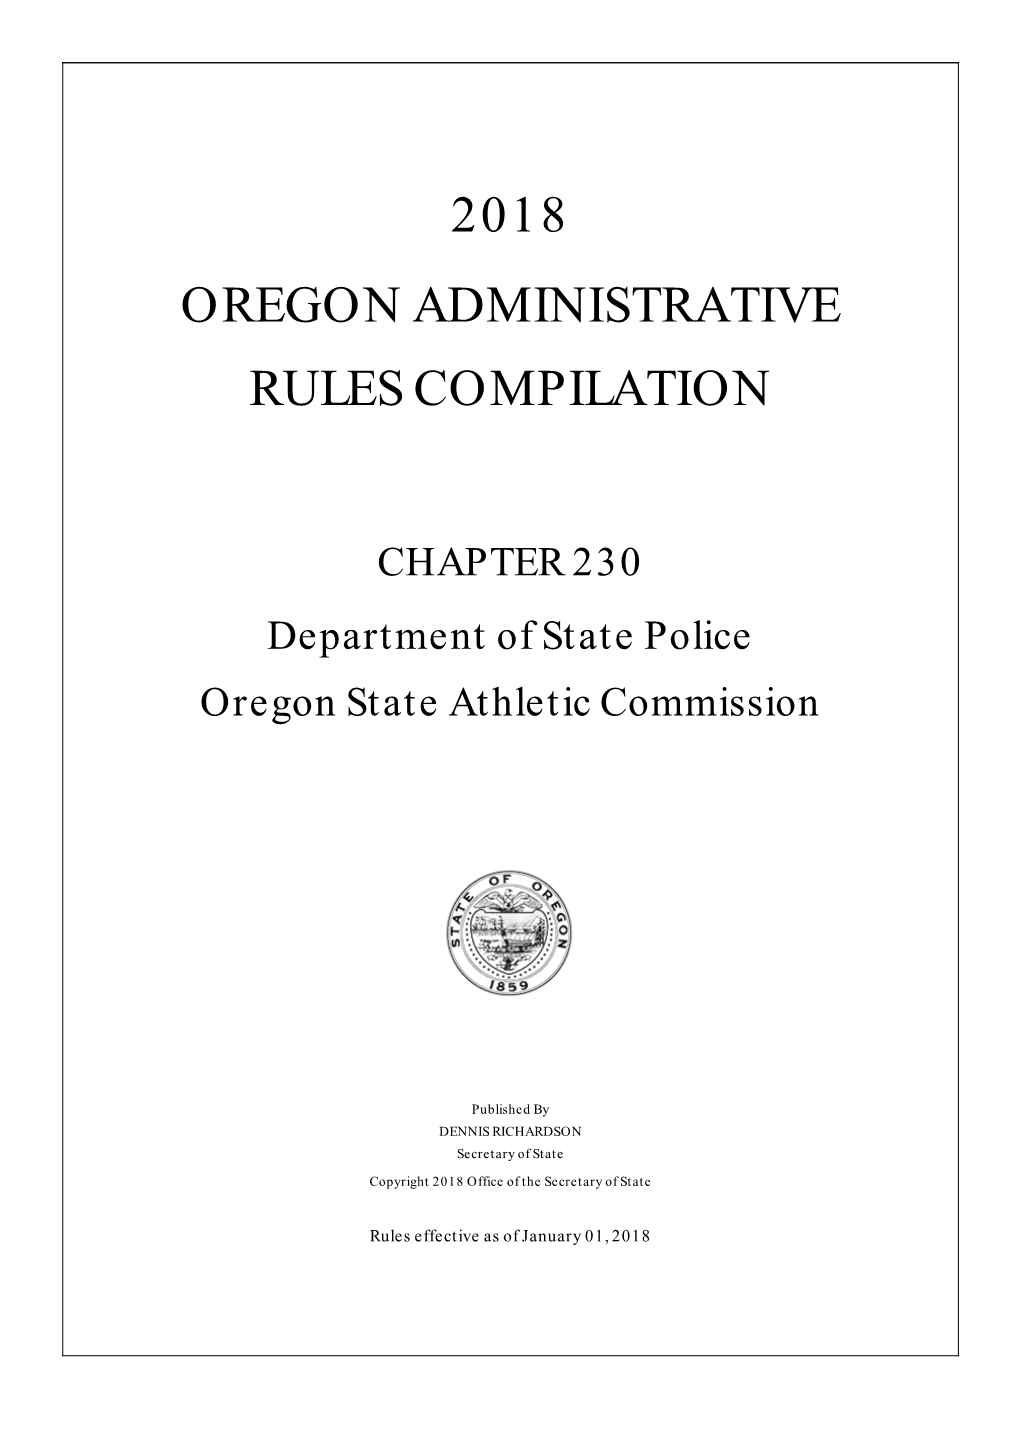 2018 Oregon Administrative Rules Compilation